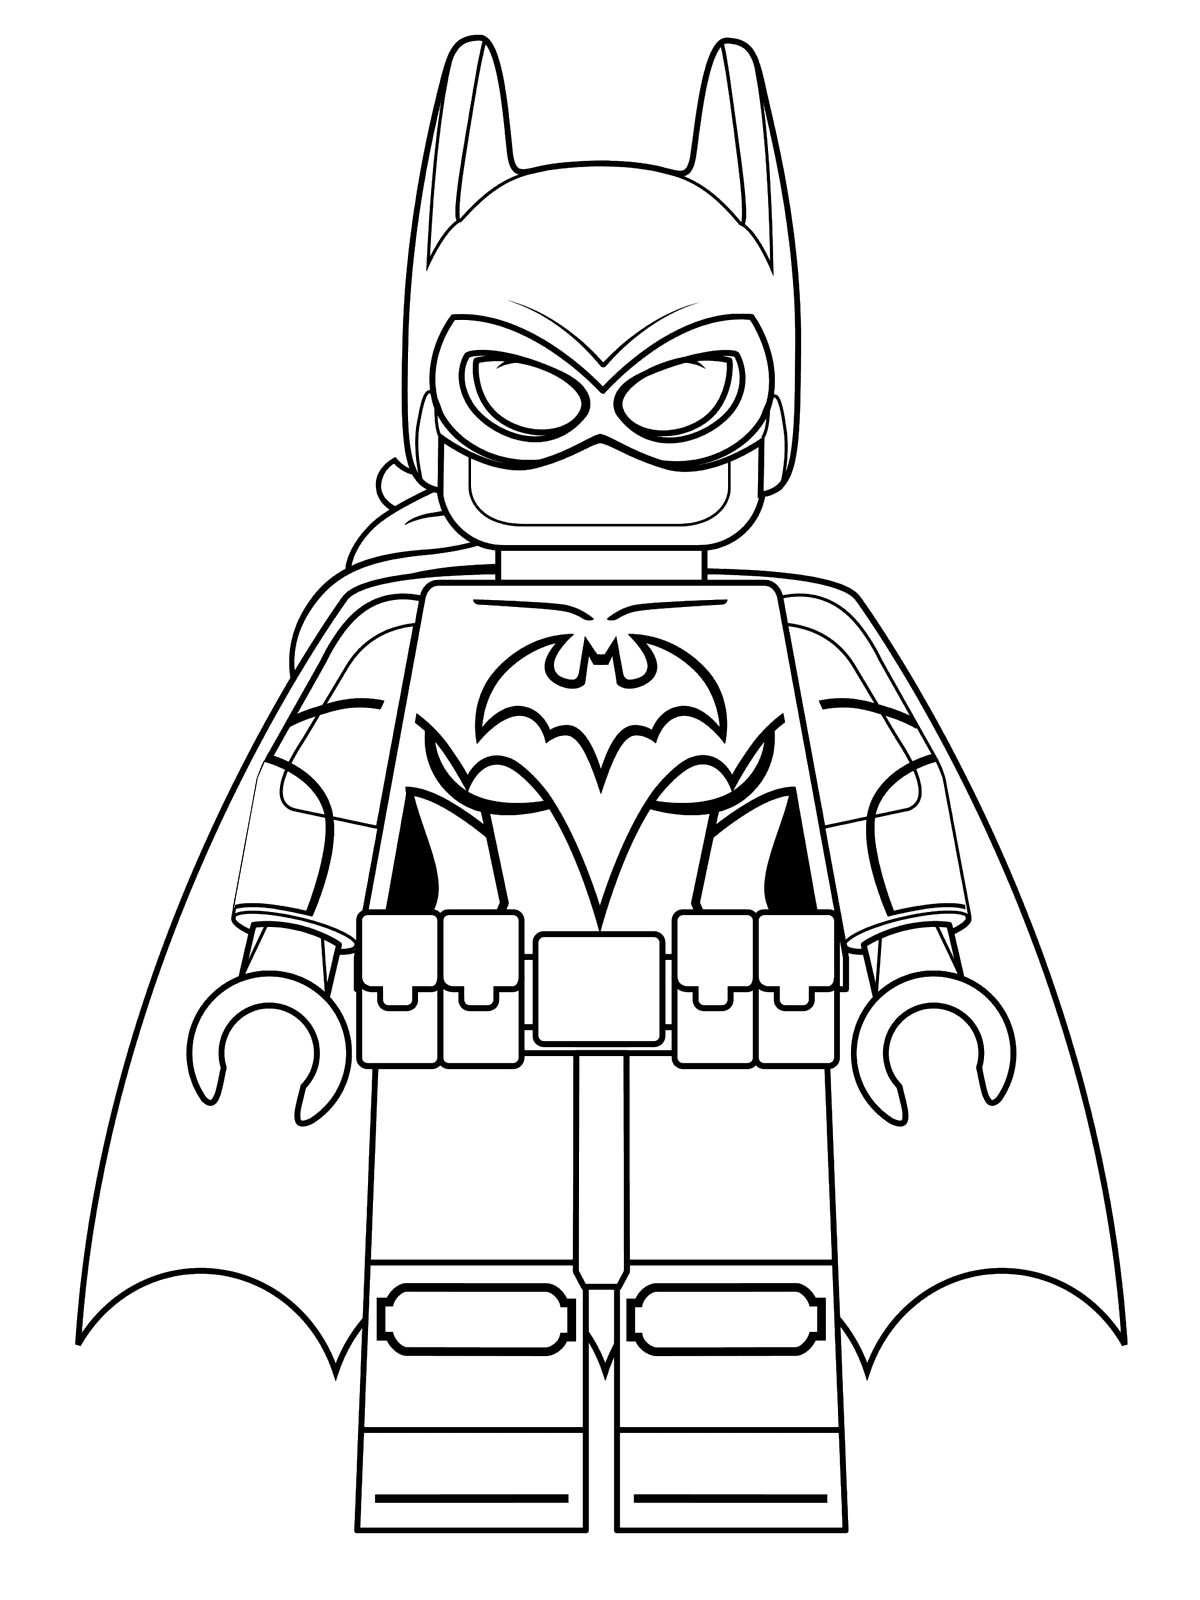 Lego Batman Coloring Sheet
 Lego Batman Coloring Pages Best Coloring Pages For Kids